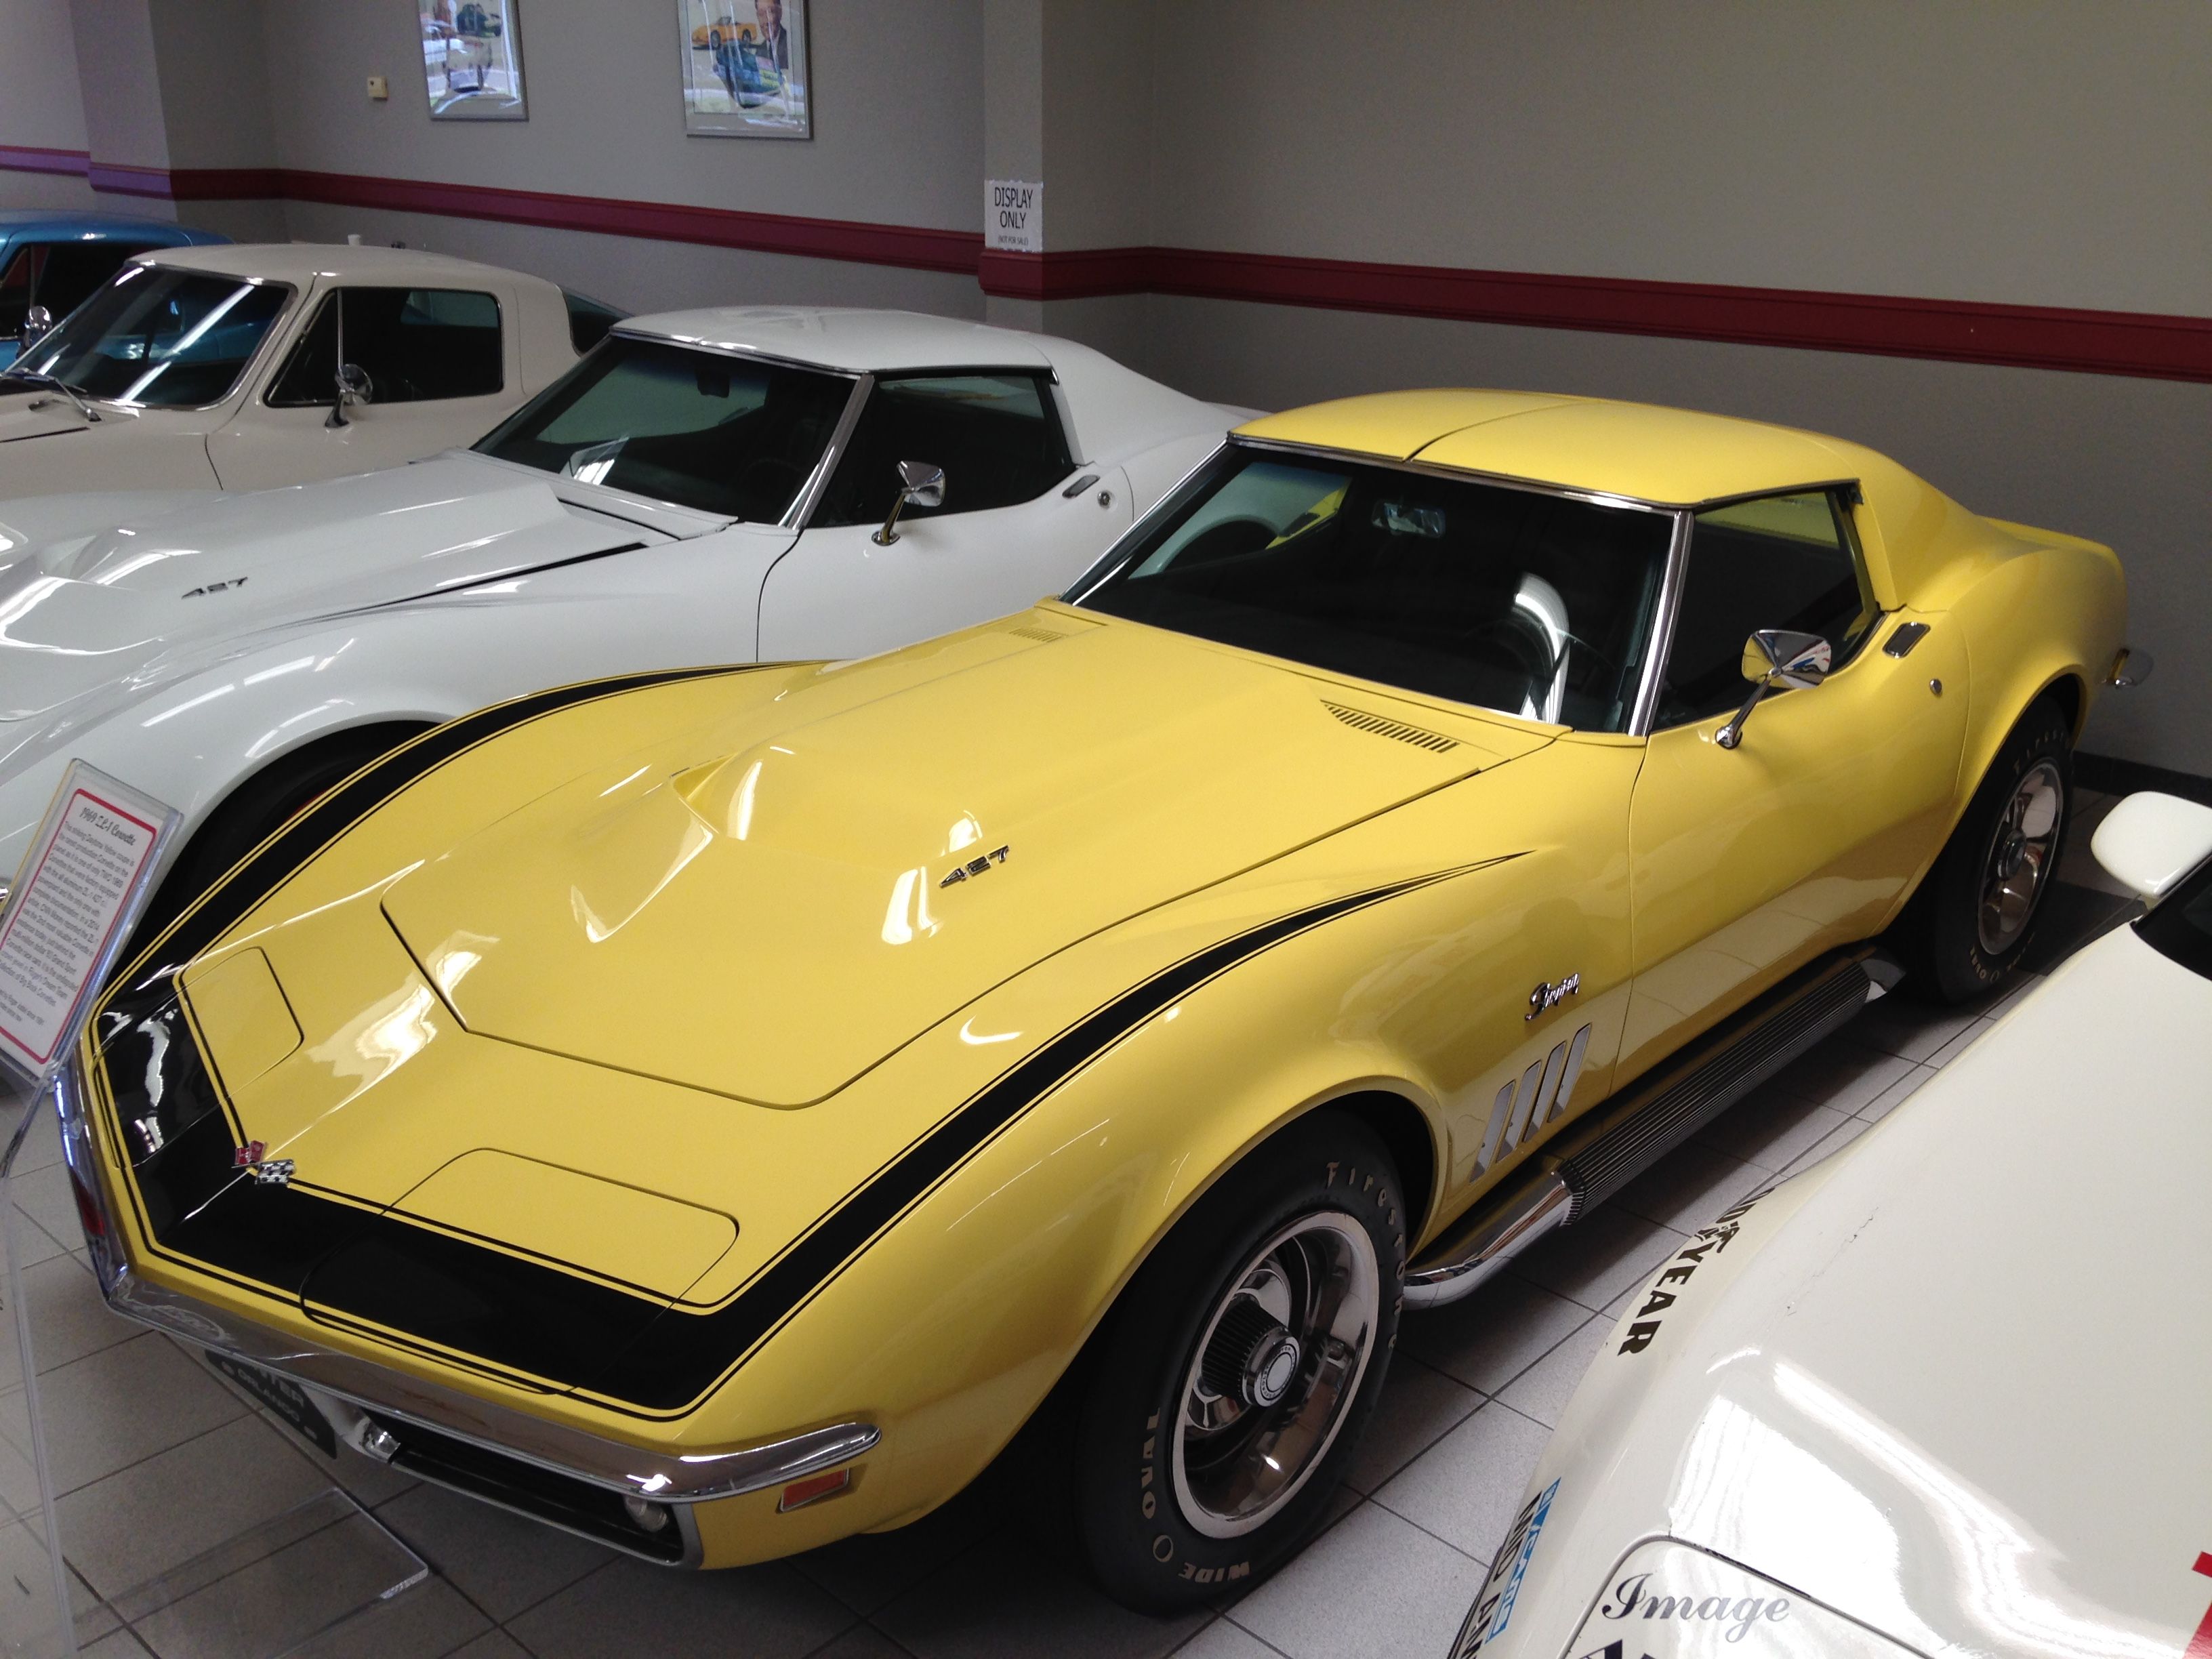 1969 Chevrolet Corvette ZL-1 (Yellow) - Front Right